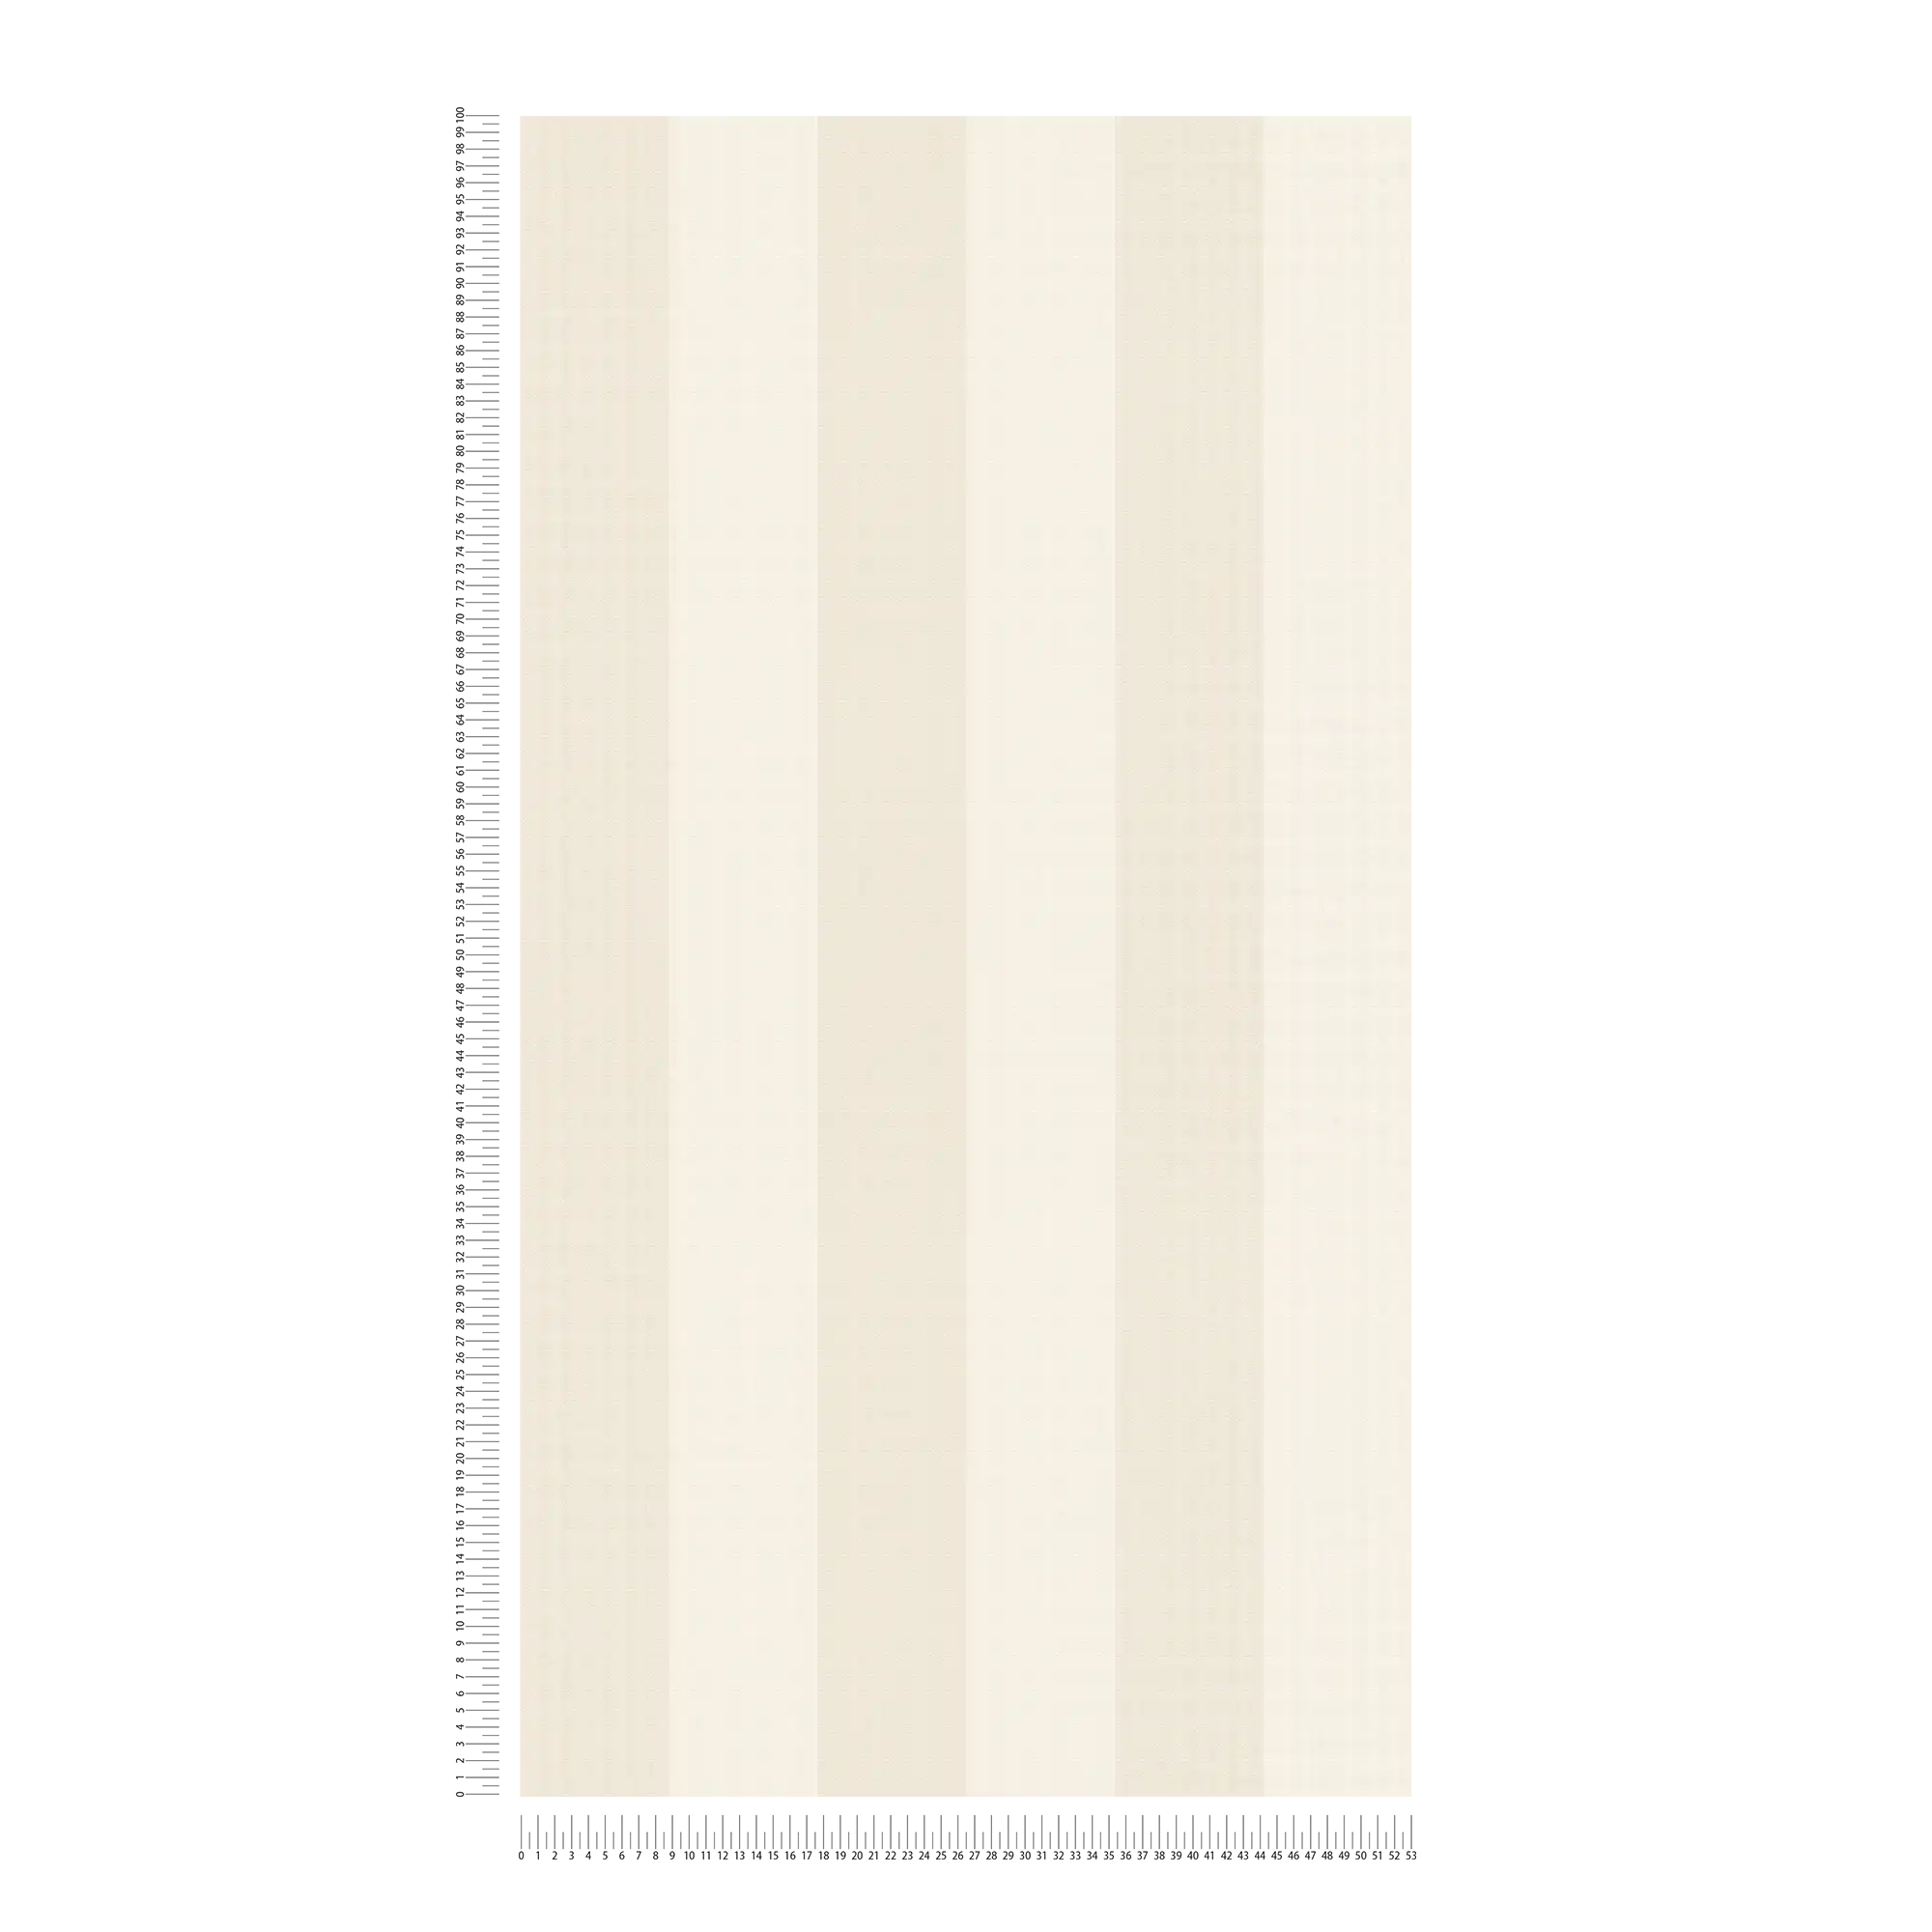             Wallpaper Karl LAGERFELD stripes profile pattern - cream
        